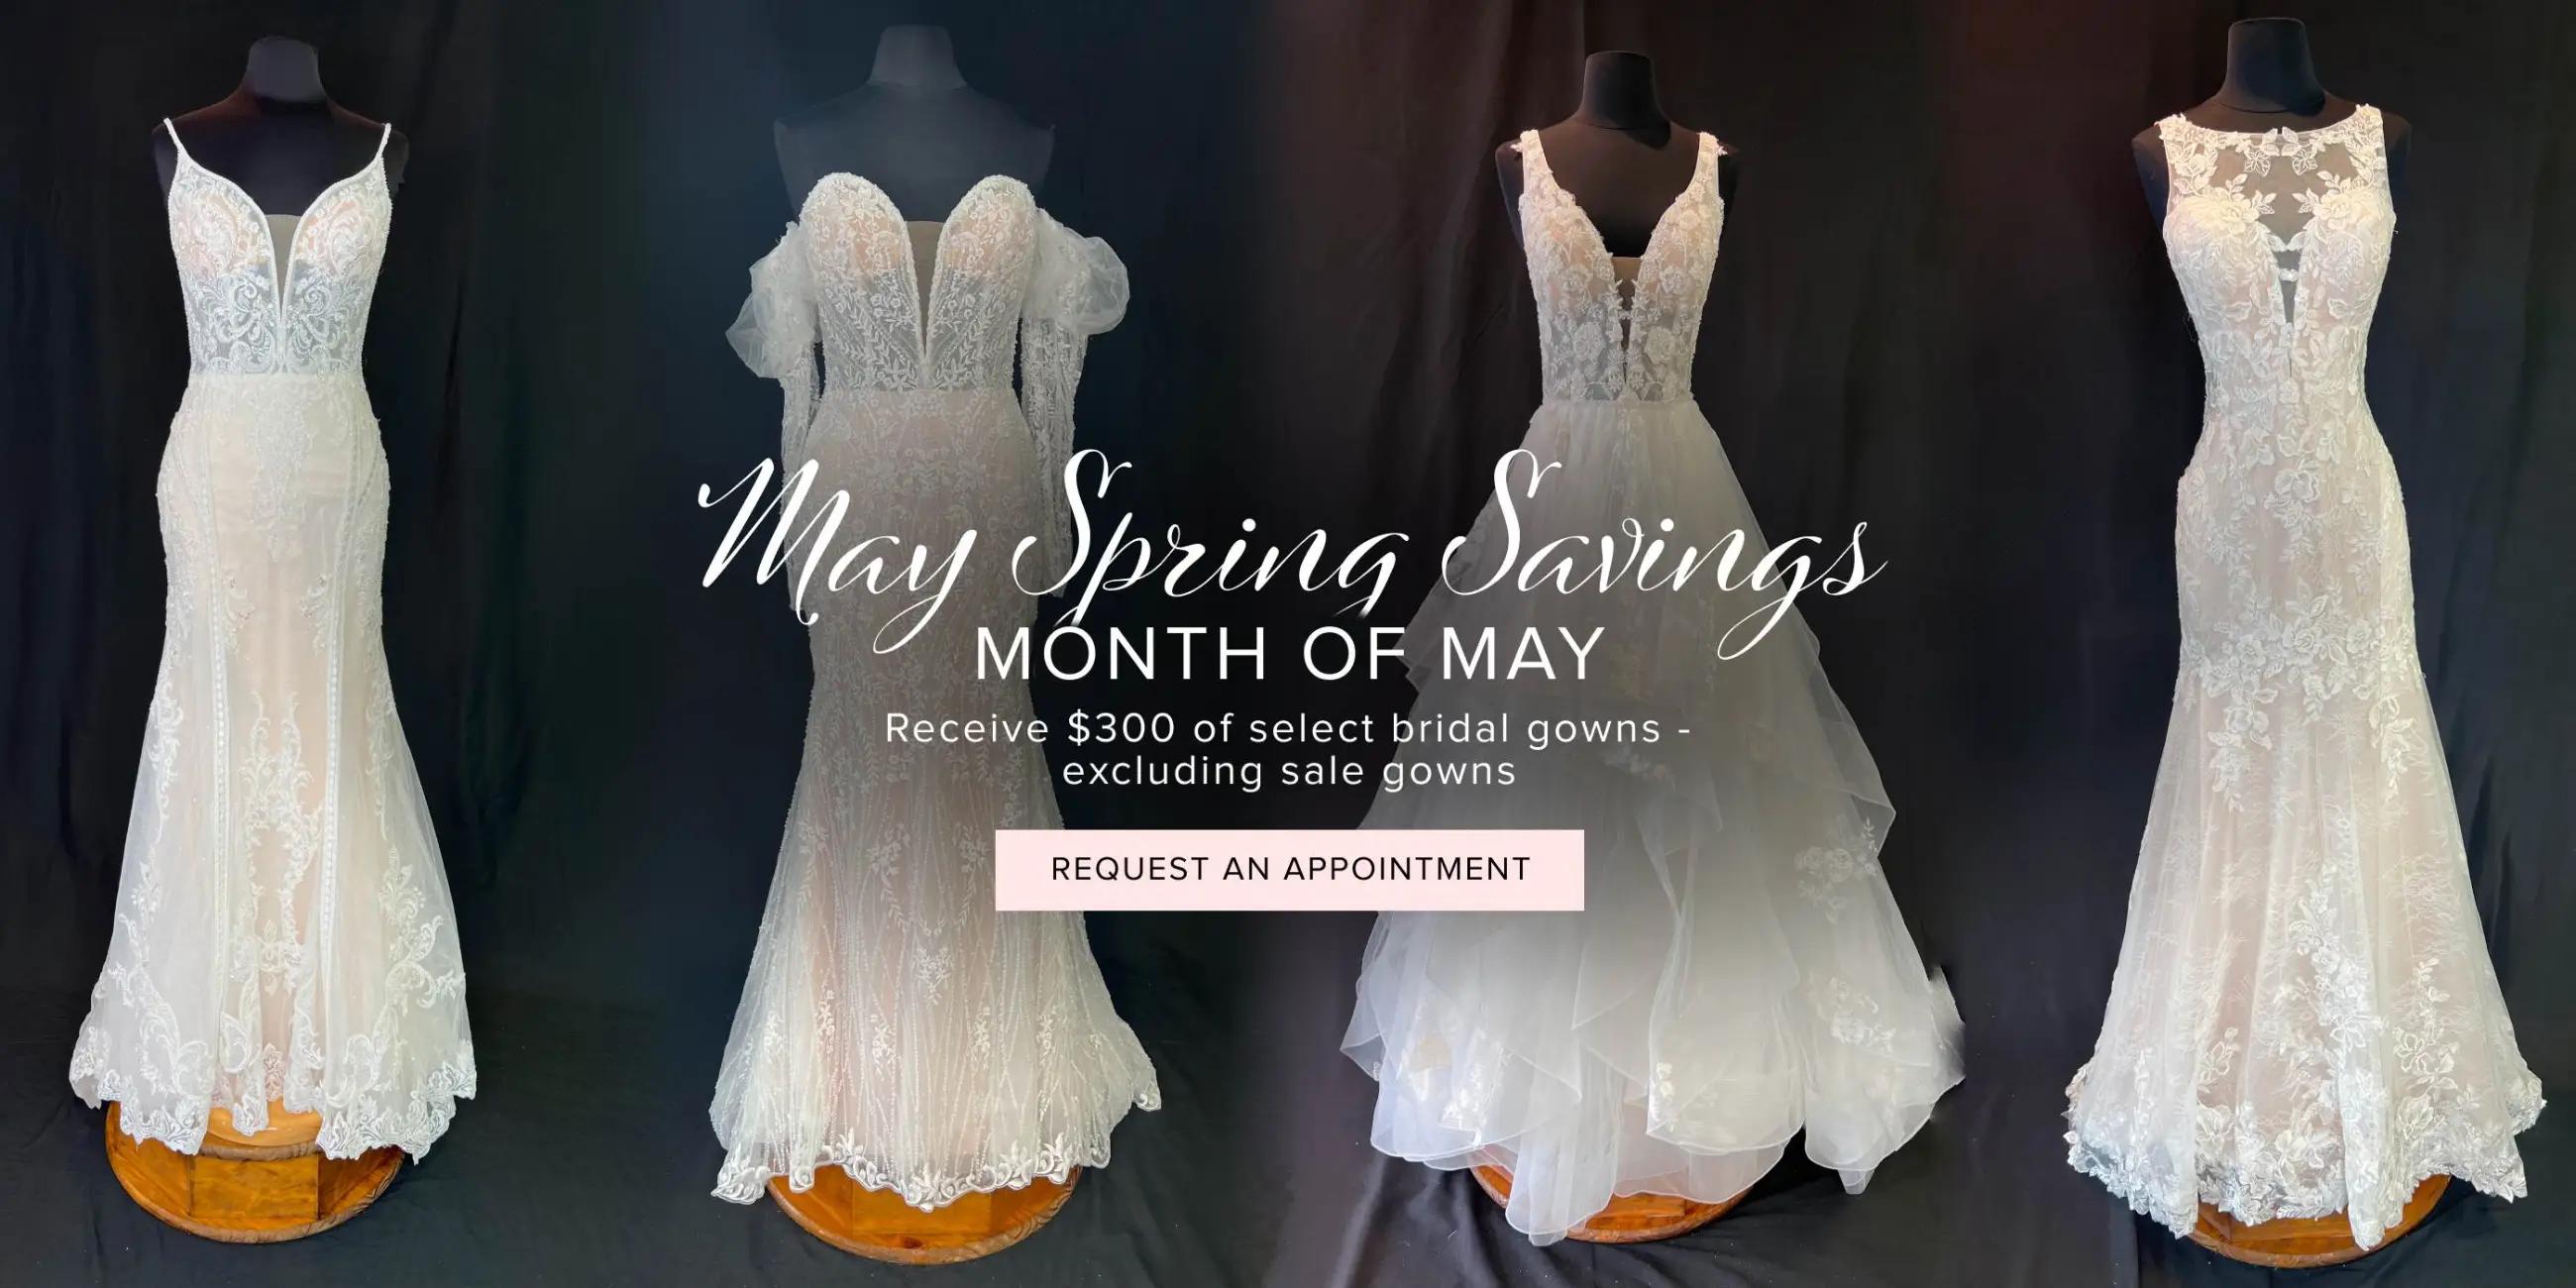 May Spring Savings on wedding dresses at After 5 Weddings